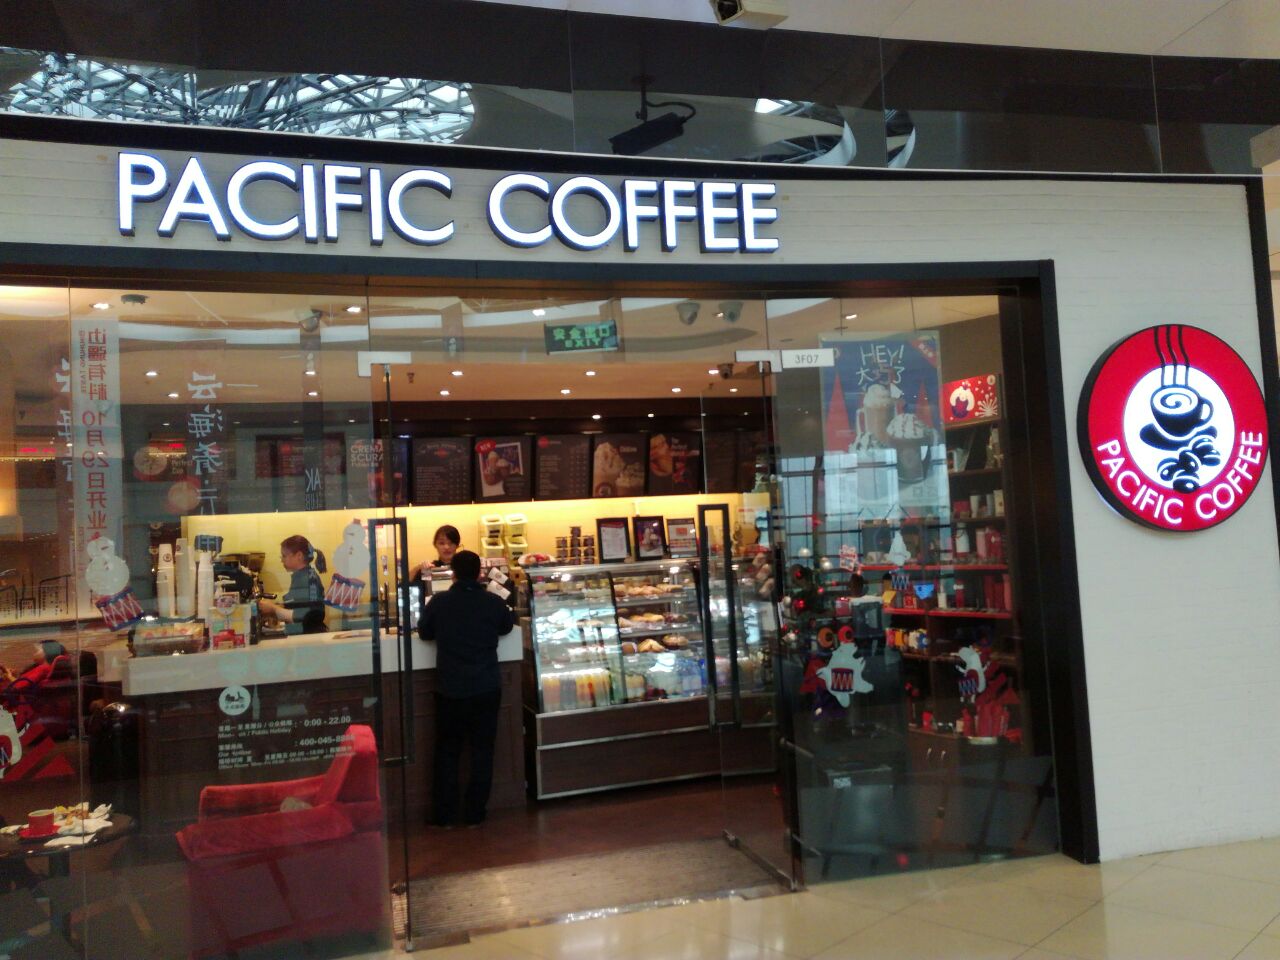 太平洋咖啡 PACIFIC COFFEE-罐头图库